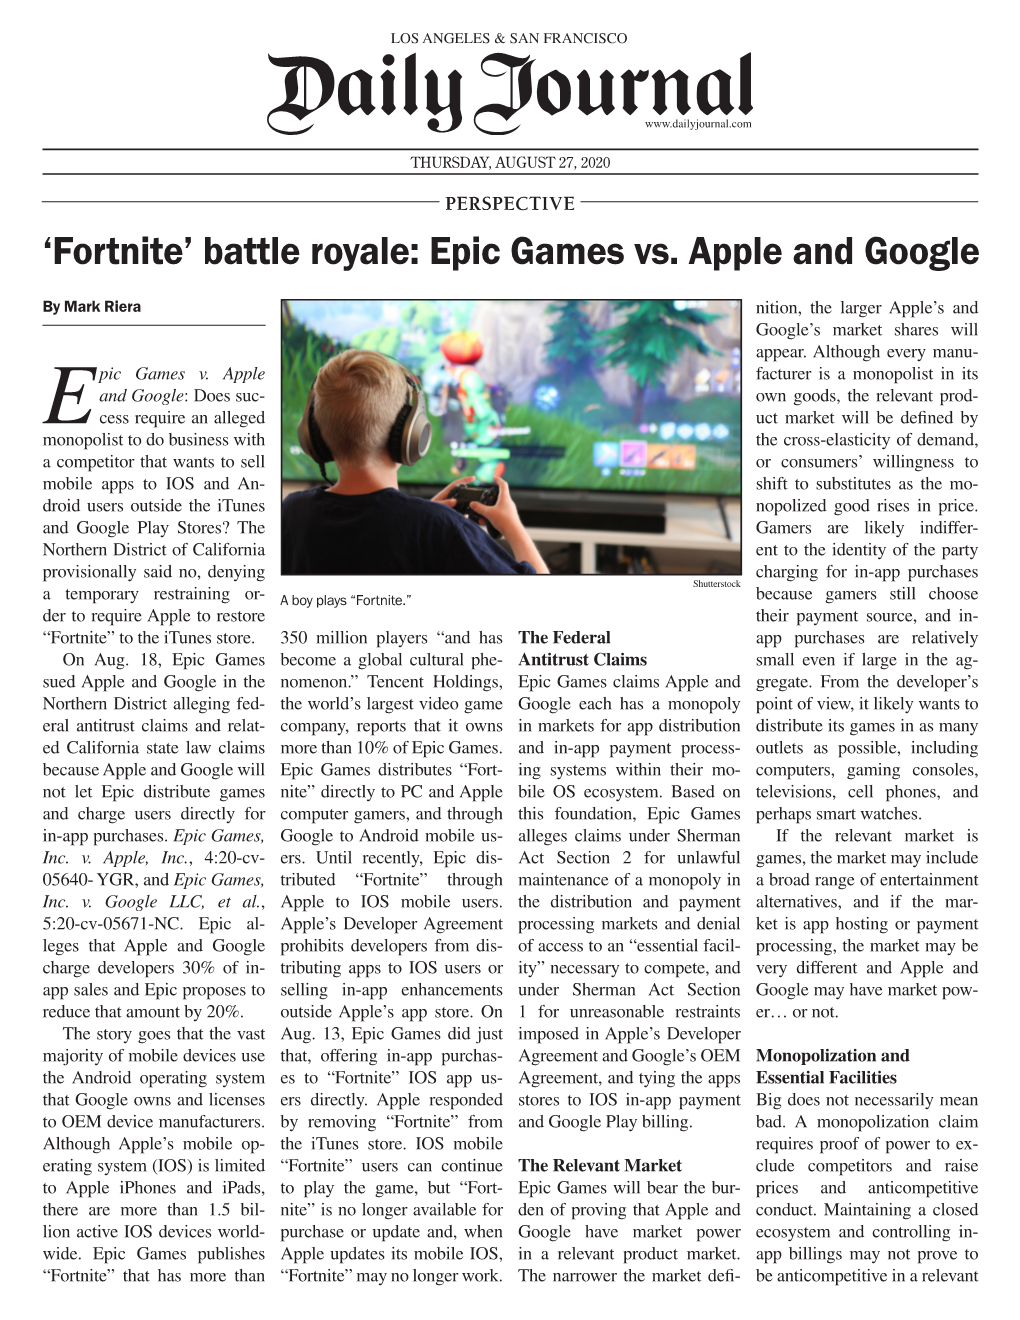 Fortnite' Battle Royale: Epic Games Vs Apple and Google